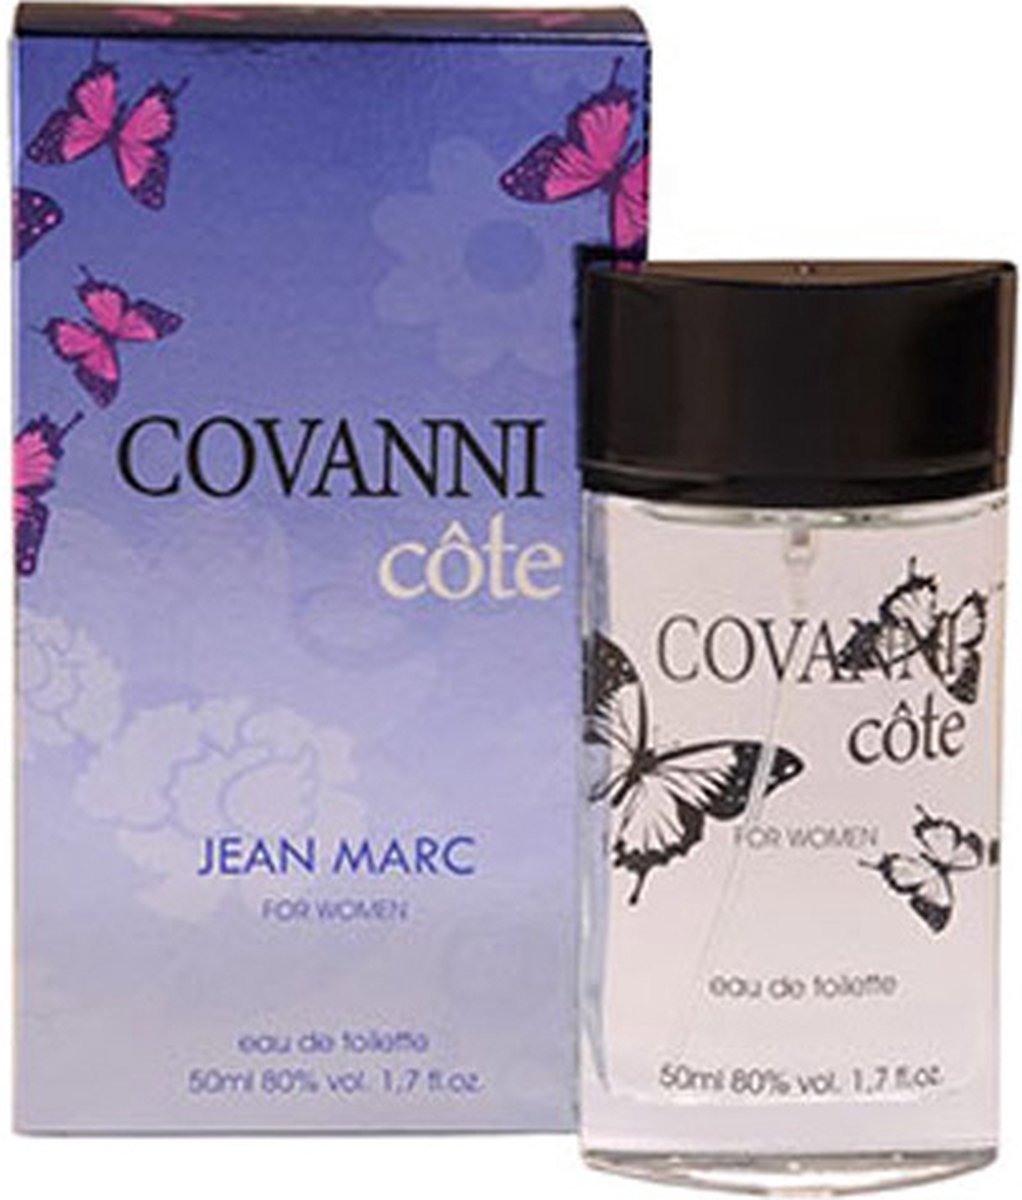 Jean Marc Covanni Cote For Women Edp Spray 50ml